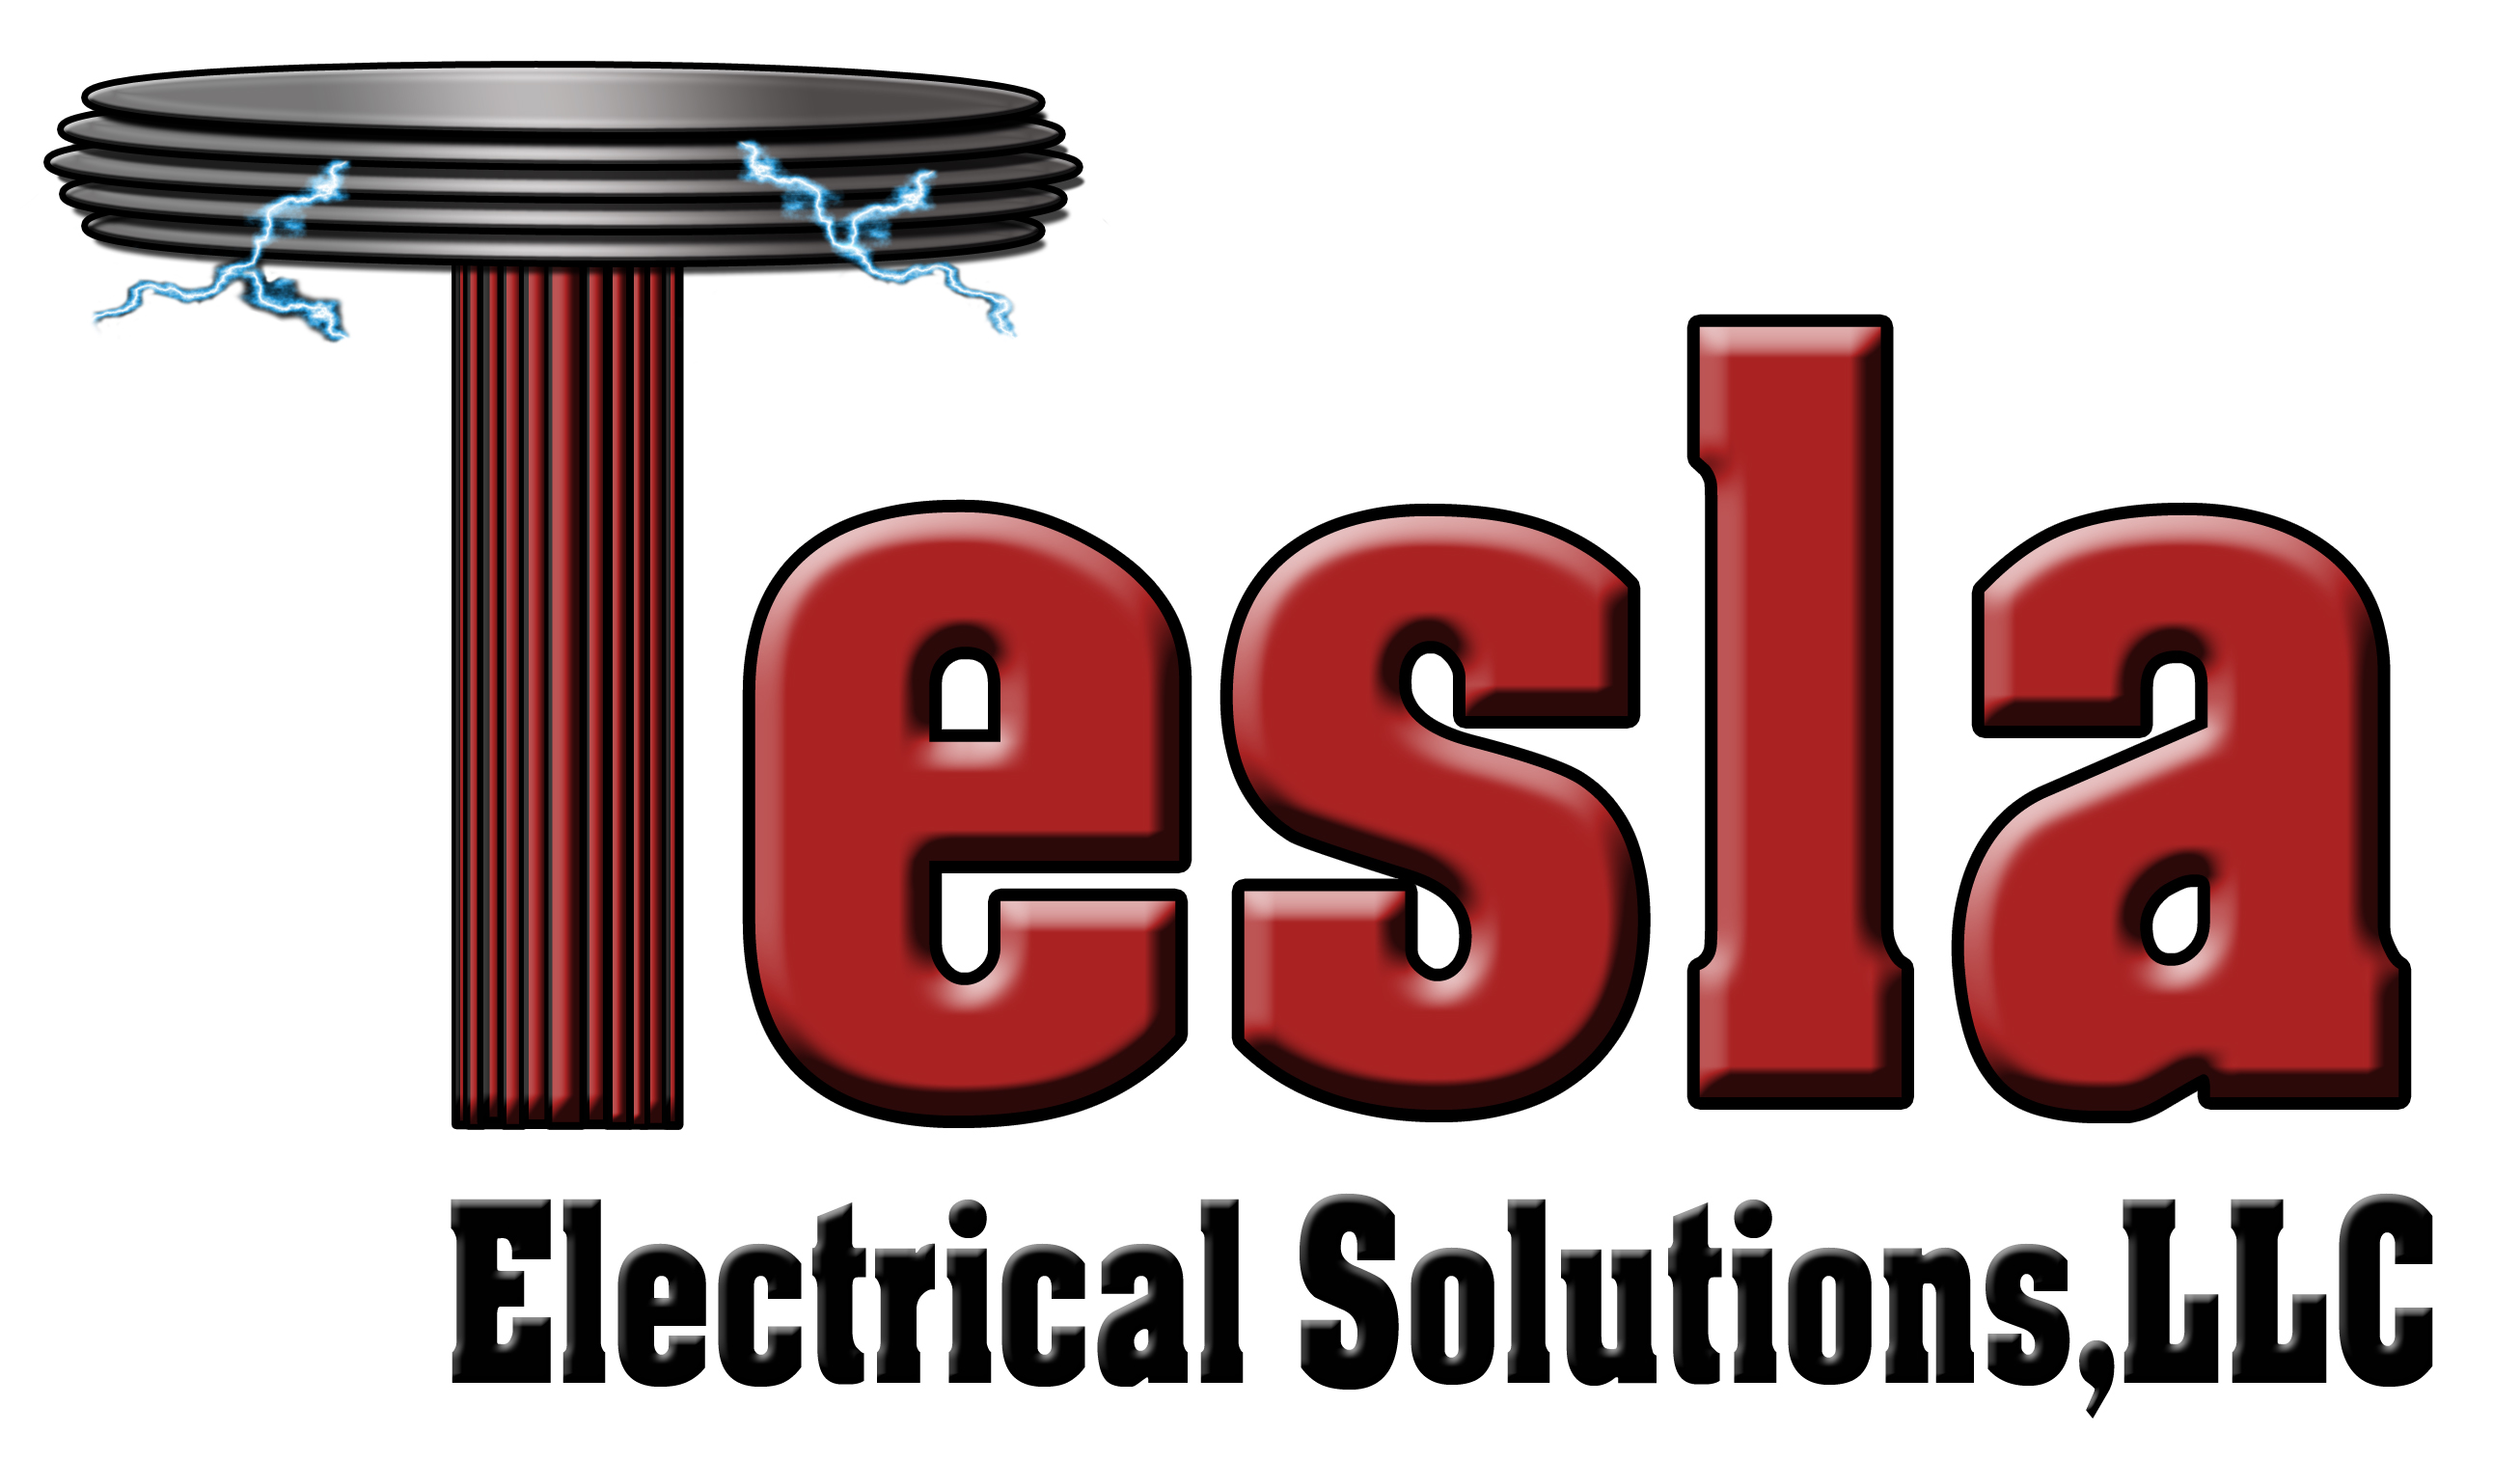 Tesla Electrical Solutions, LLC Logo